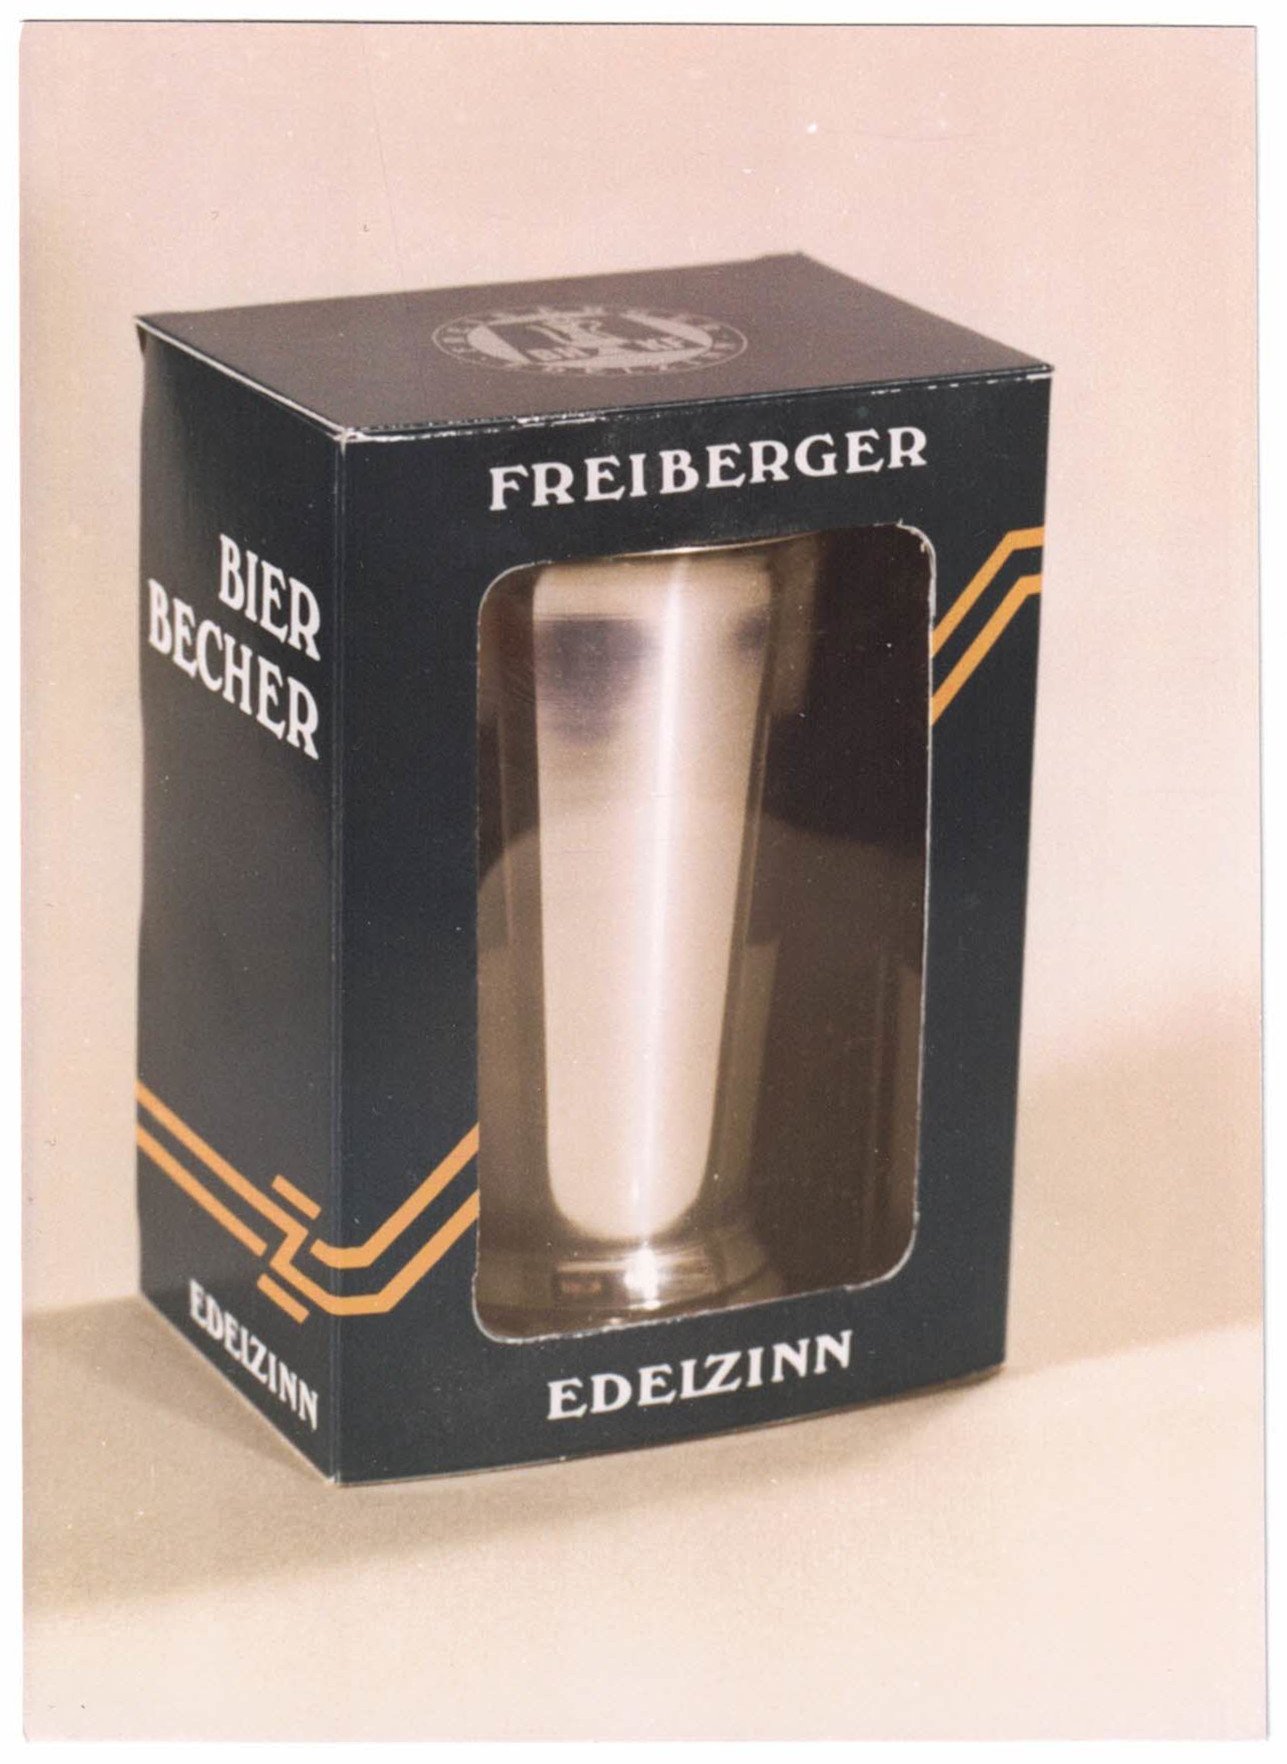 Fotografie eines Bierbechers der Marke "Freiberger Edelzinn" (Saxonia-Freiberg-Stiftung CC BY-NC-SA)